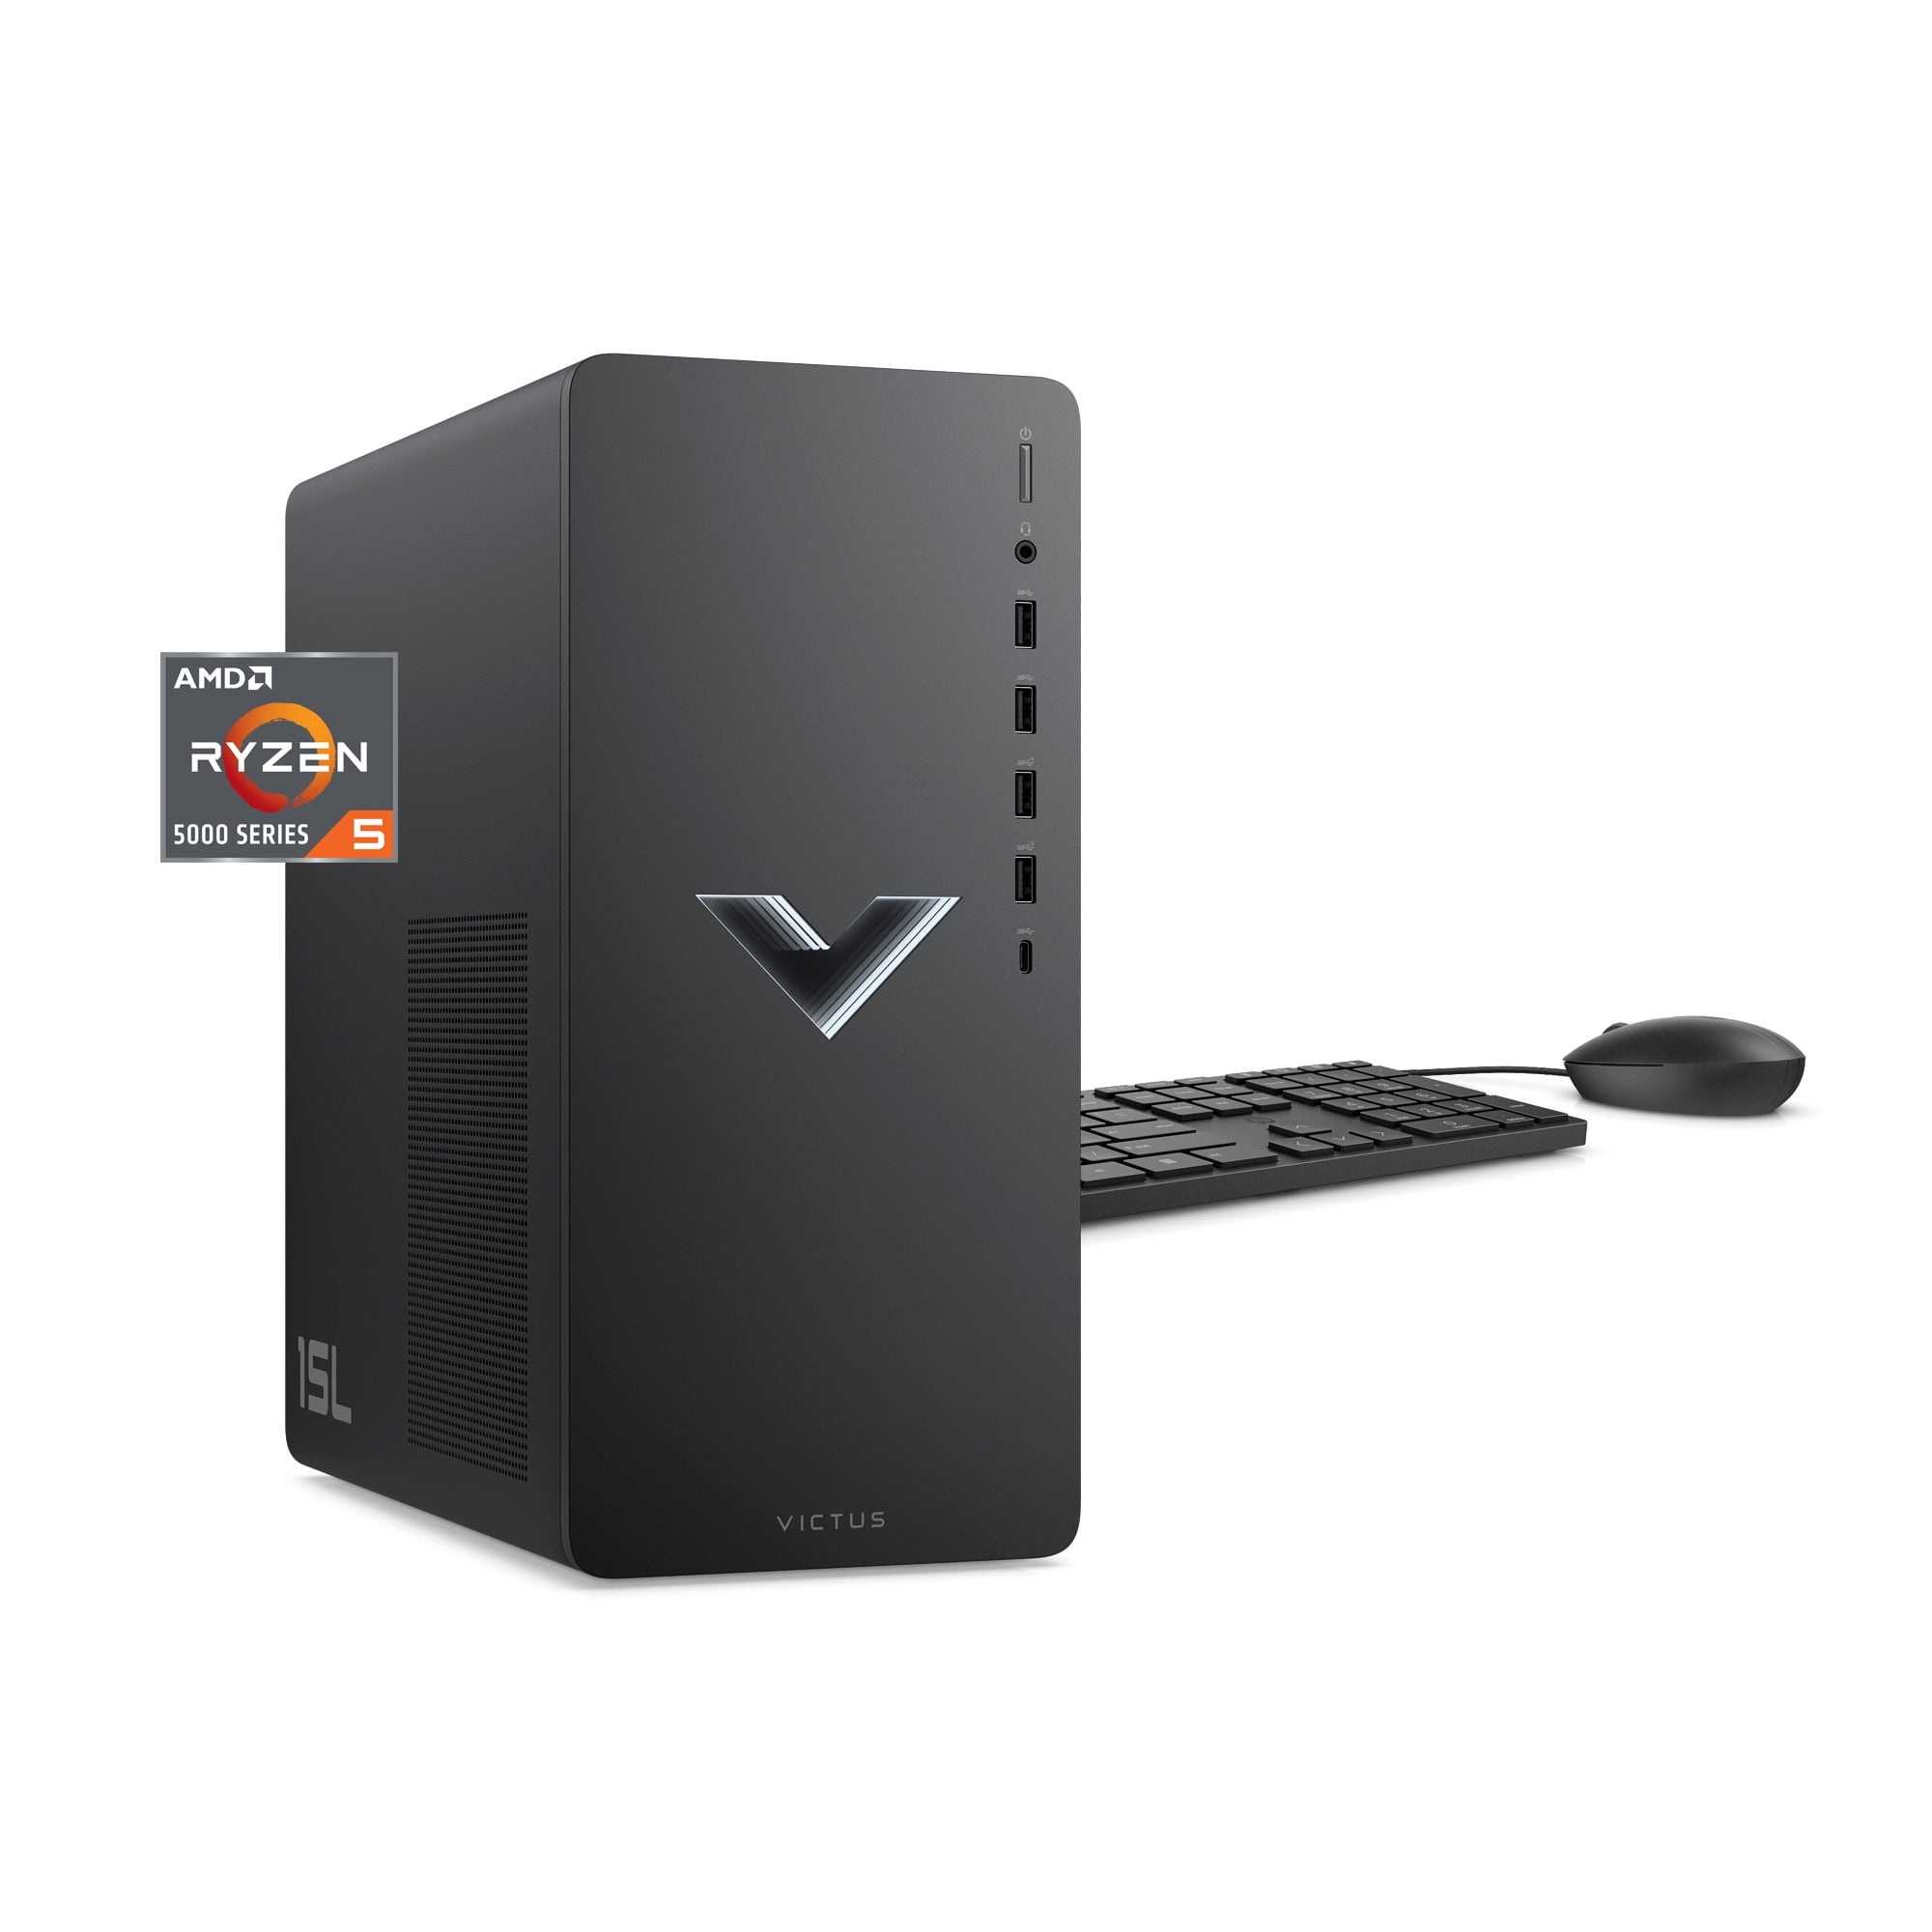 HP Victus 15L (TG02-0013w) Gaming Desktop, AMD Ryzen 5 5600G, 8GB RAM, 512GB SSD